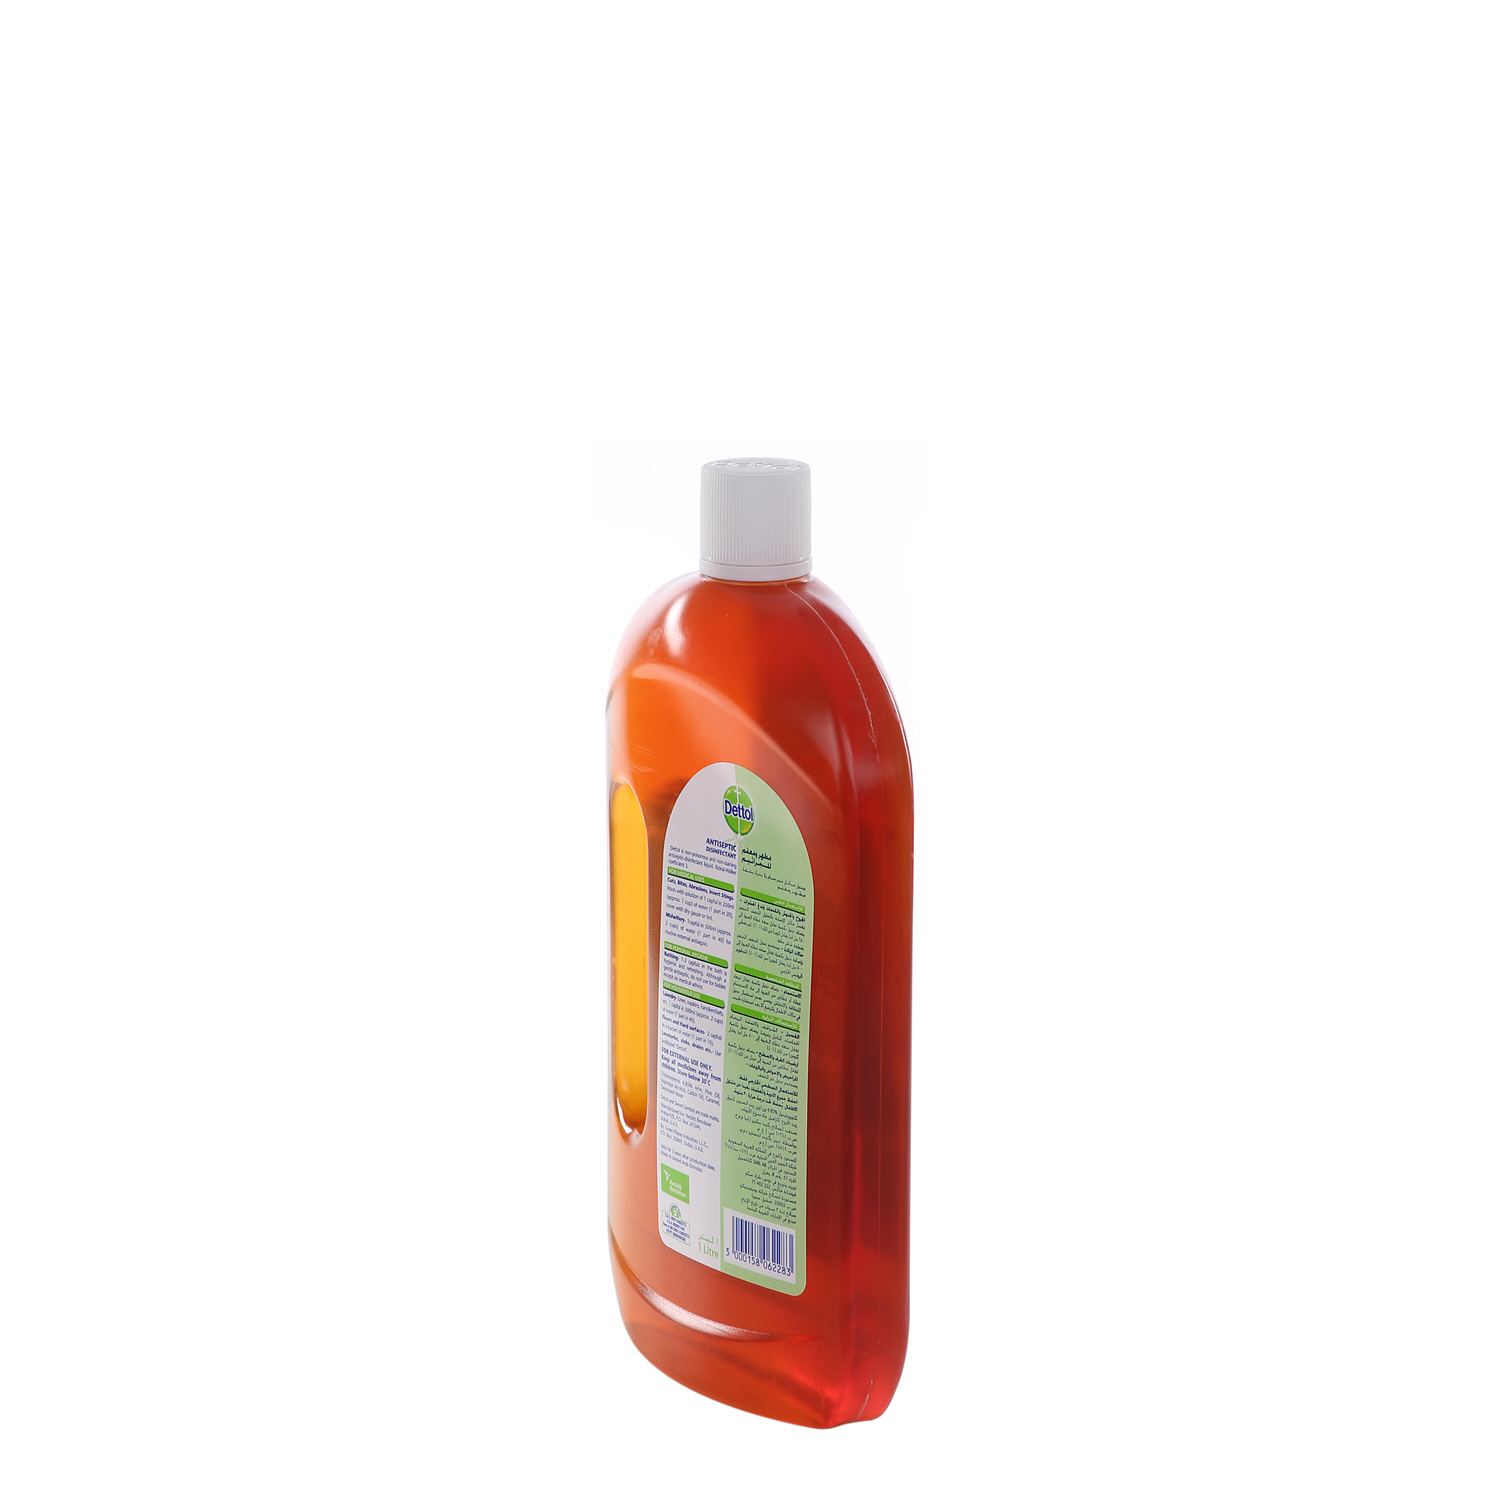 Dettol Anti-Bacterial Disinfectant Liquid 1 L